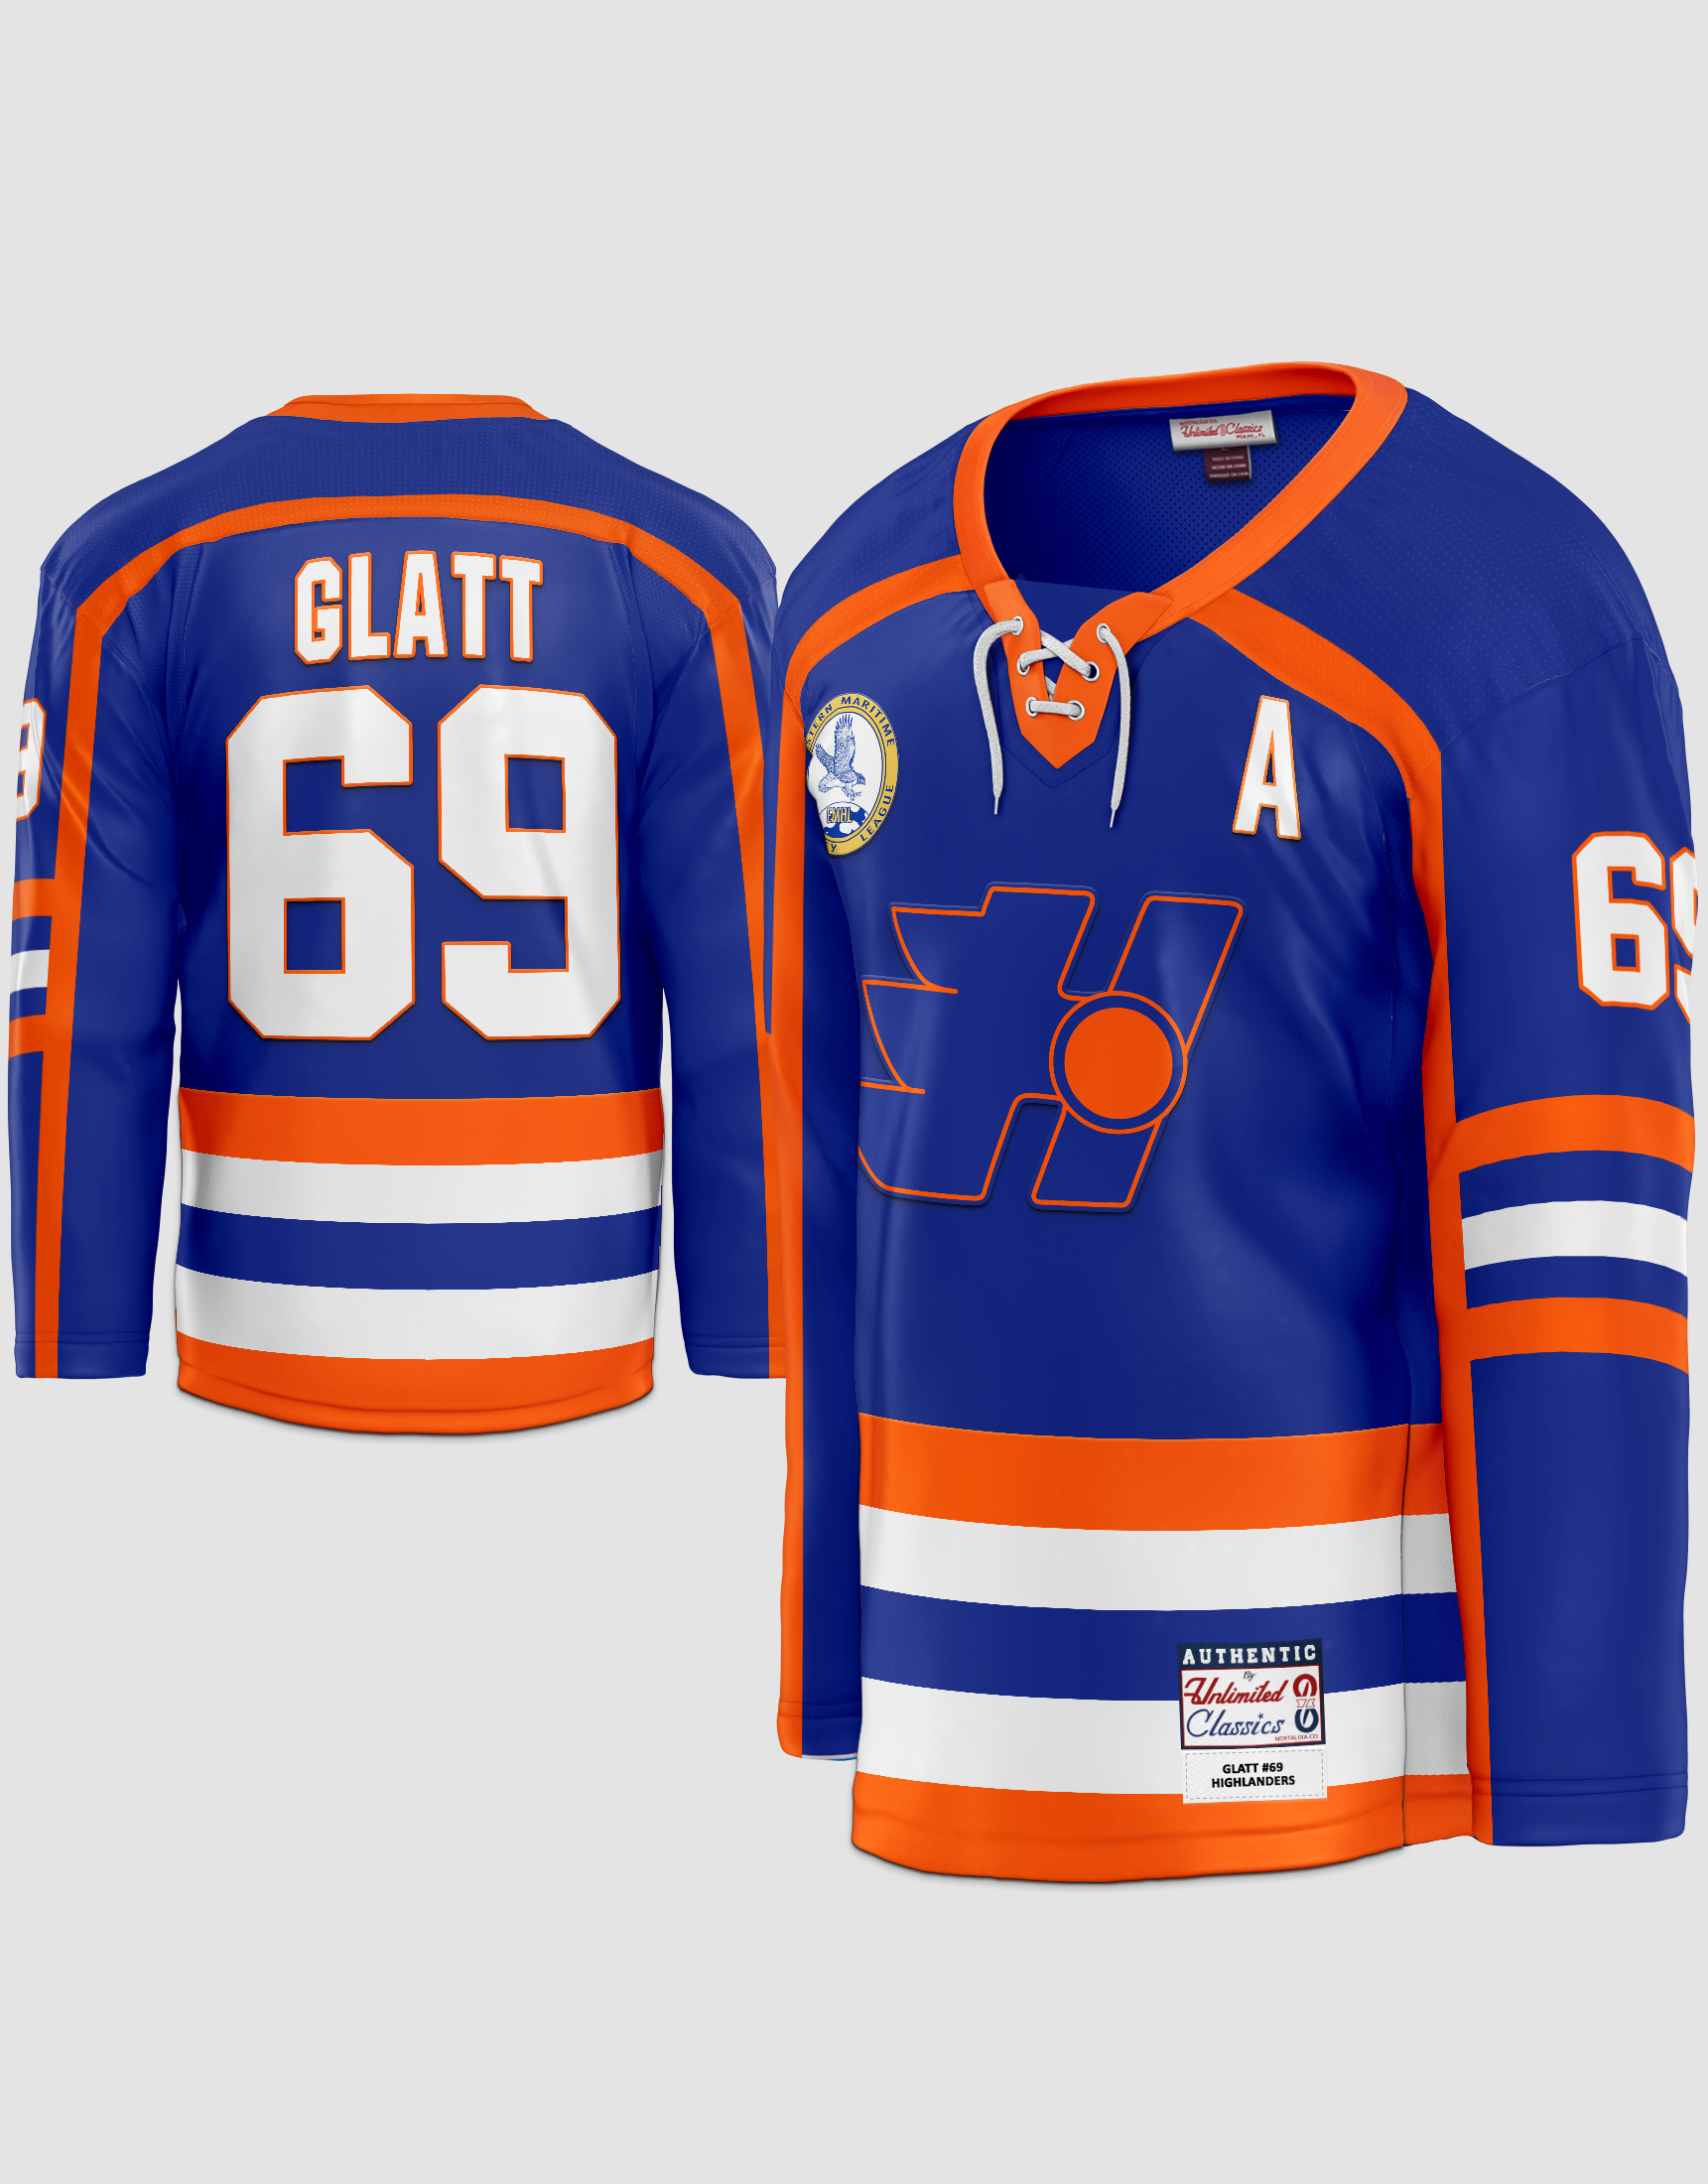 Doug Glatt #69 Goon Halifax Navy Hockey Jersey - S